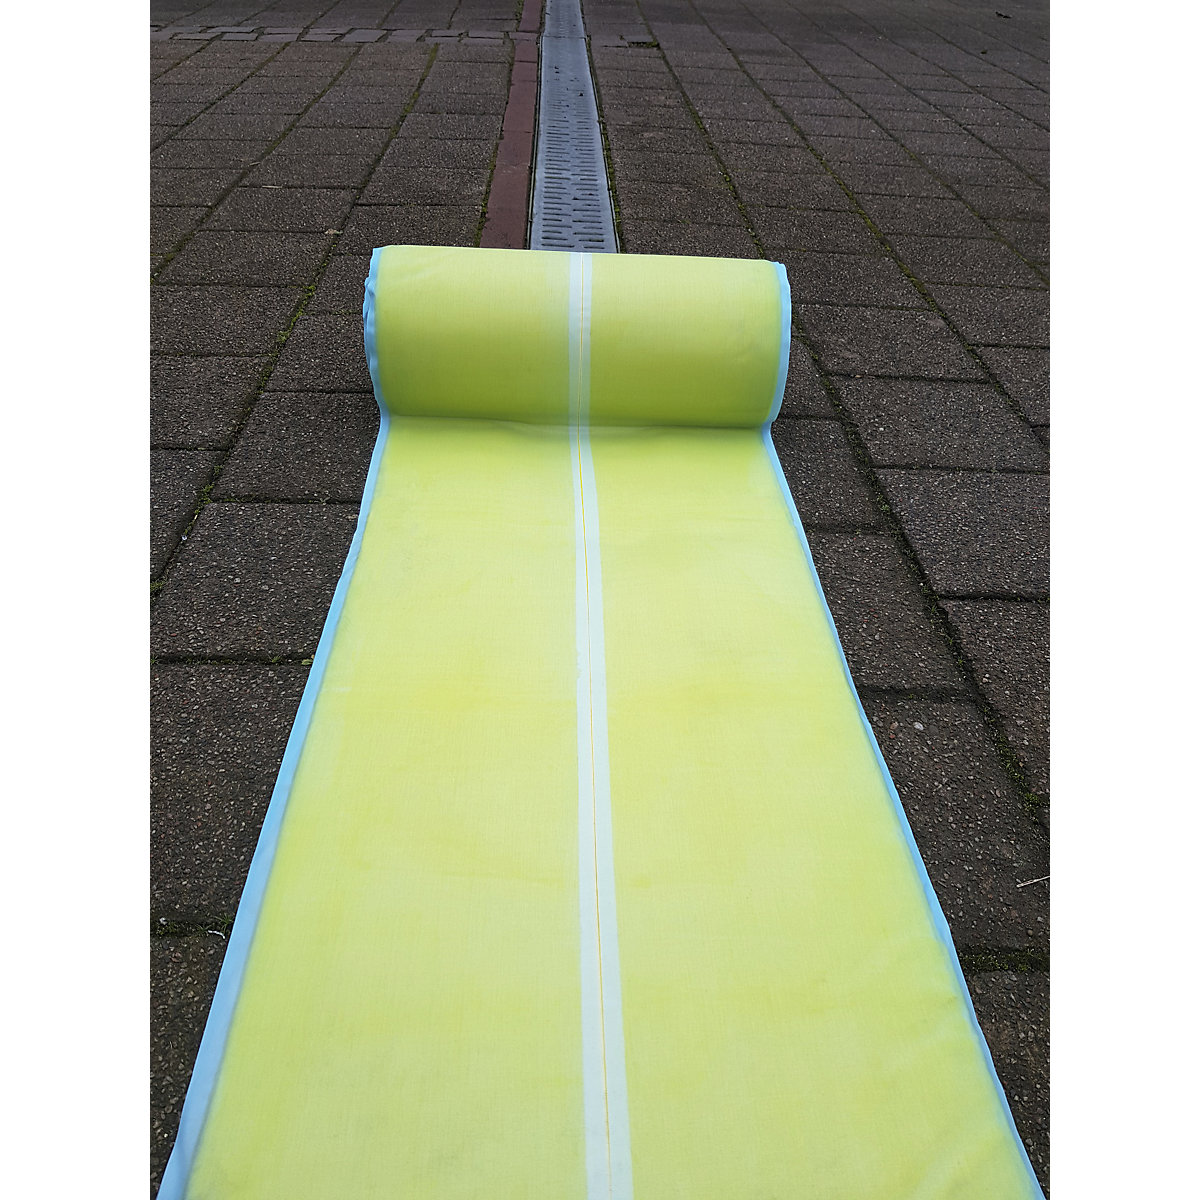 EUROKRAFTbasic – Flexible drain sealing mat (Product illustration 4)